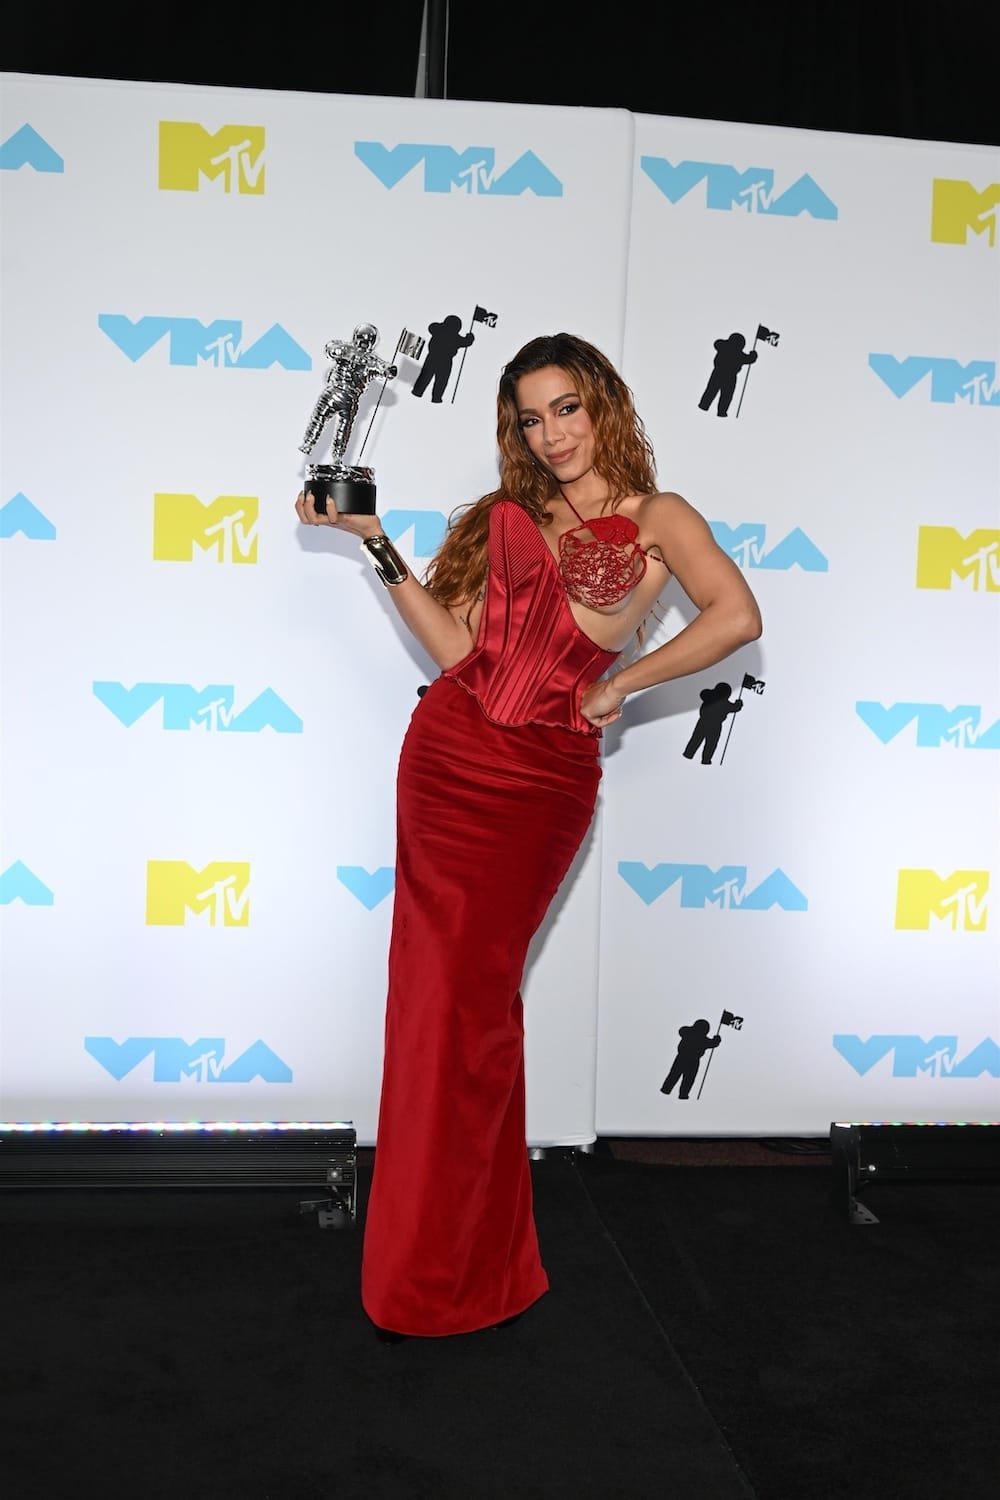 Anitta won the 'Best Latin' award for Envolver at the 2022 MTV Video Music Awards (VMAs).